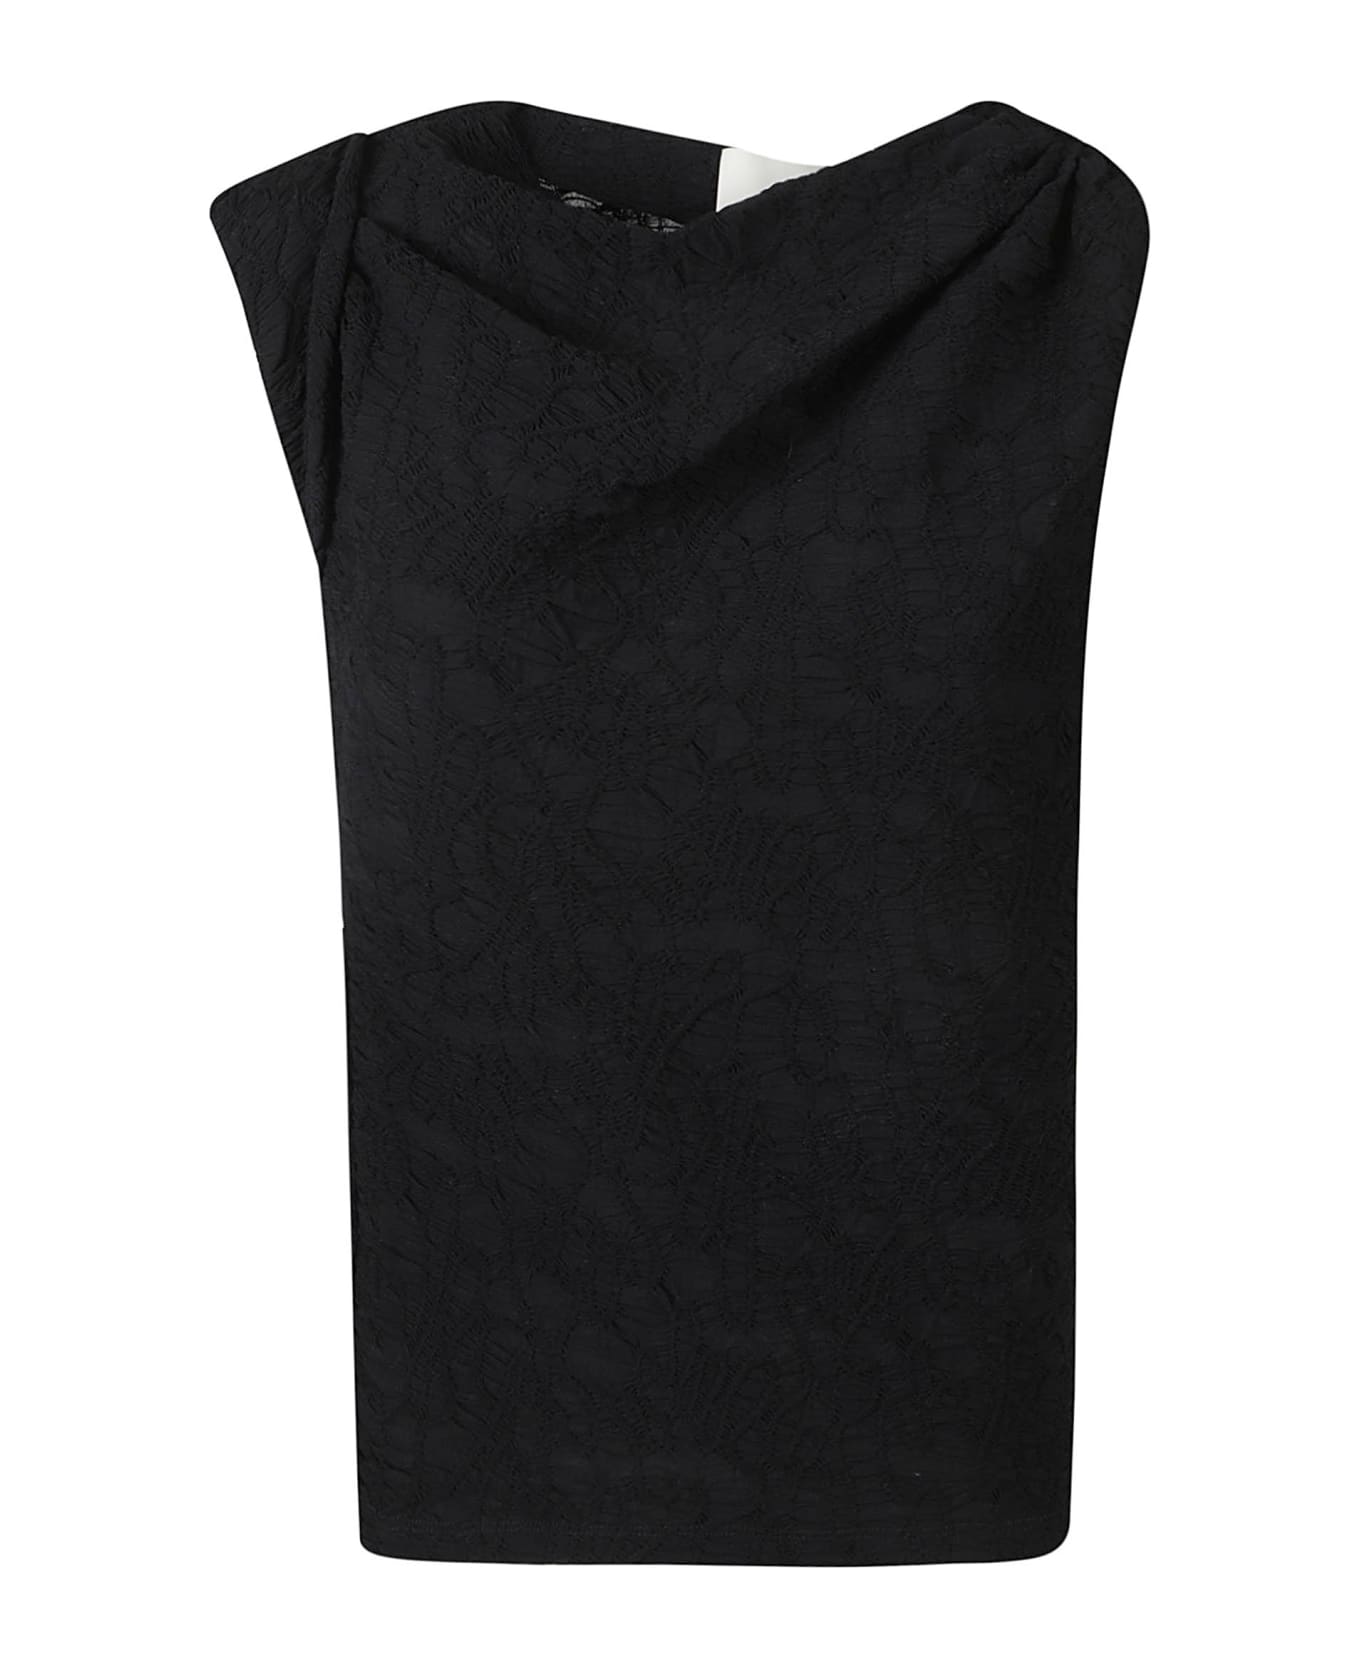 Isabel Marant Crinkled Asymmetric Jersey Top - Black